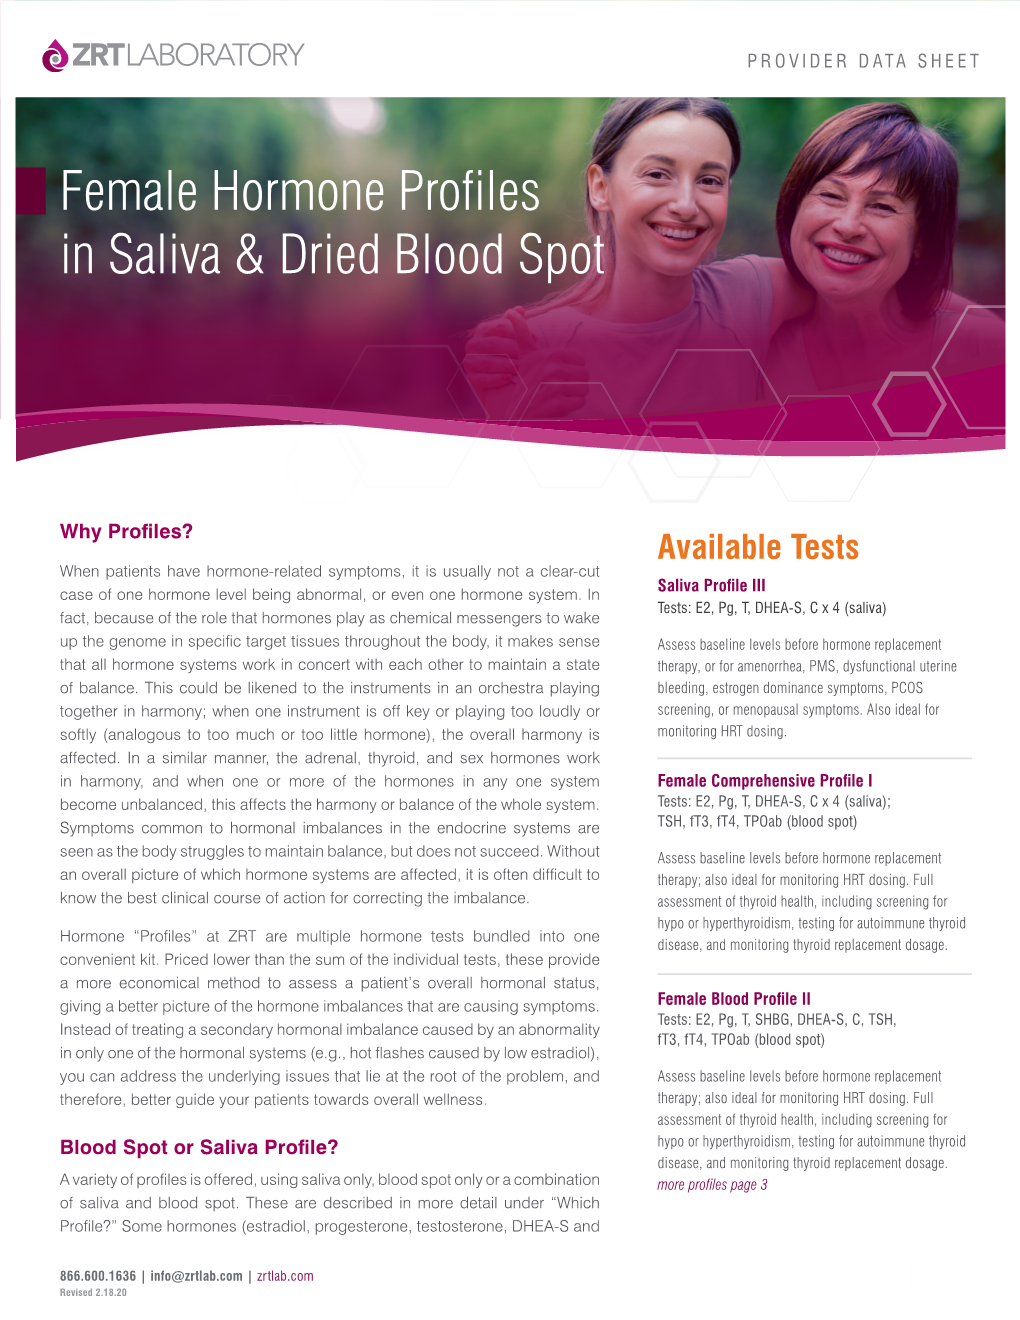 Female Hormone Profiles in Saliva & Dried Blood Spot